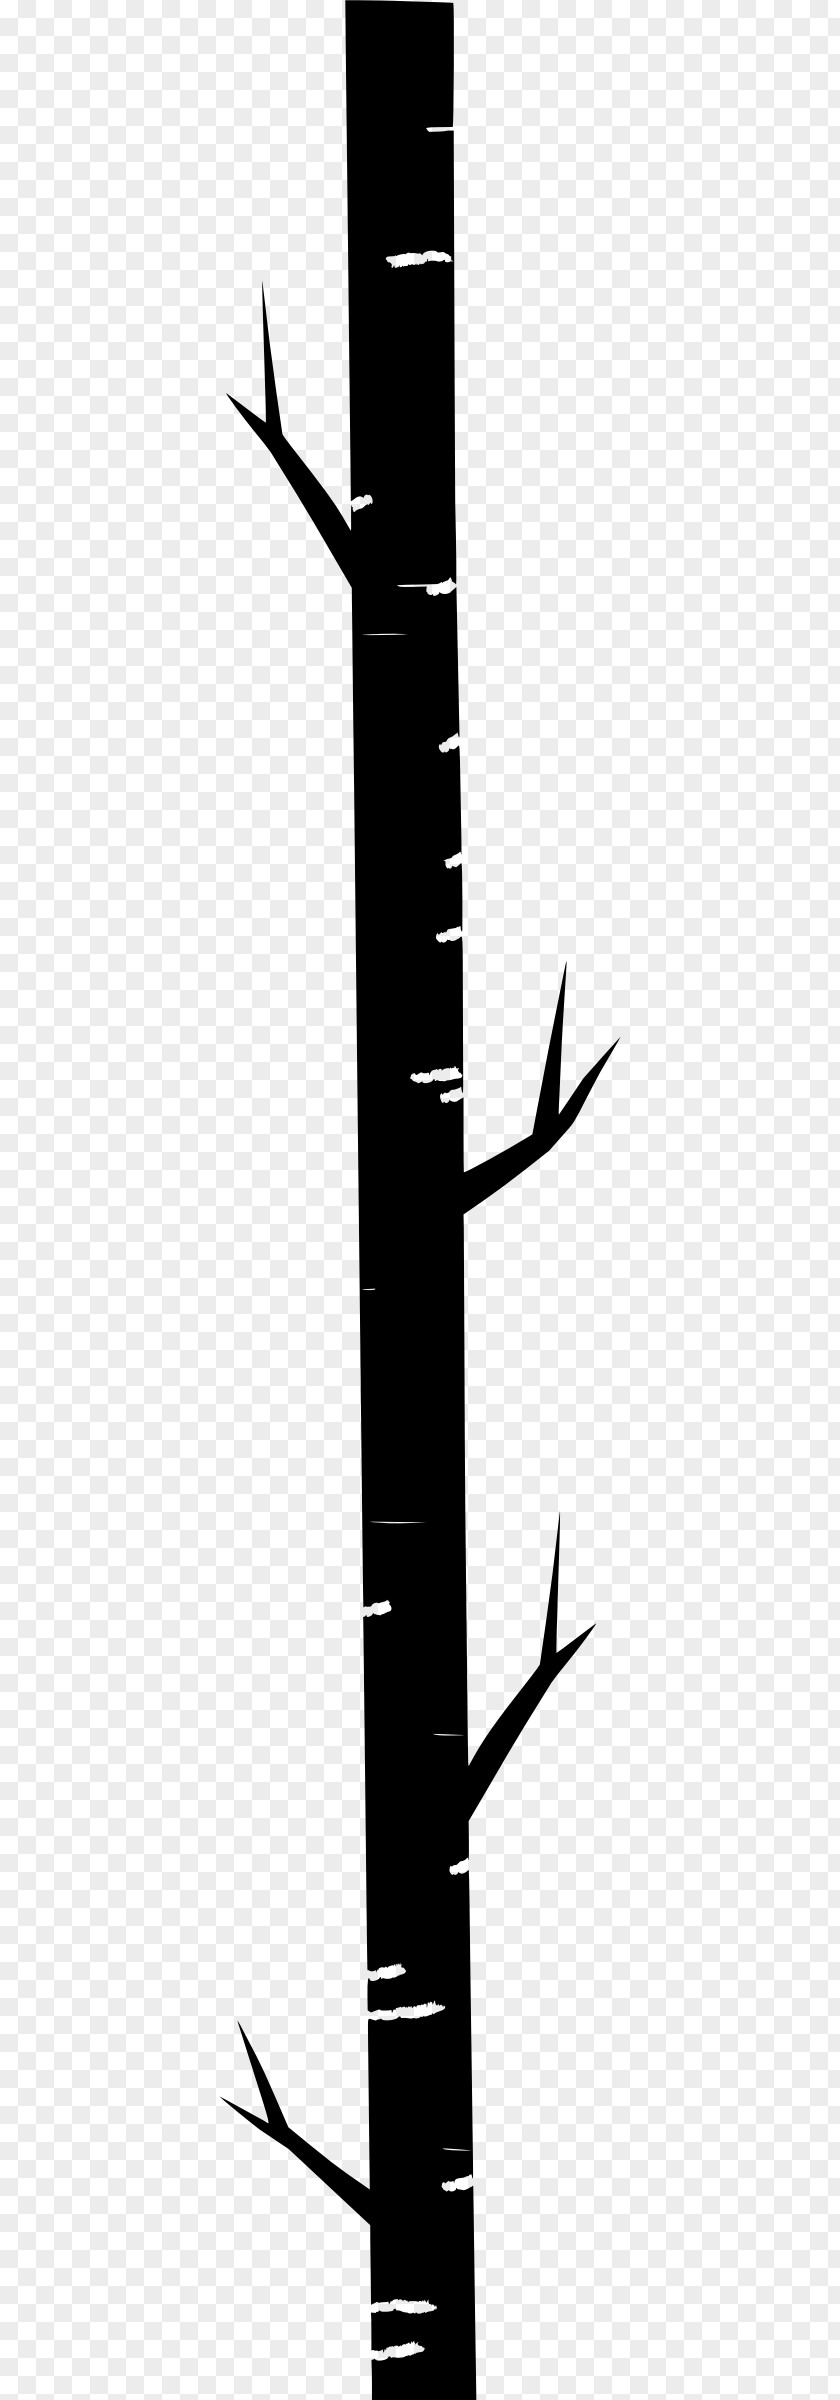 Tree Stem Trunk Clip Art PNG